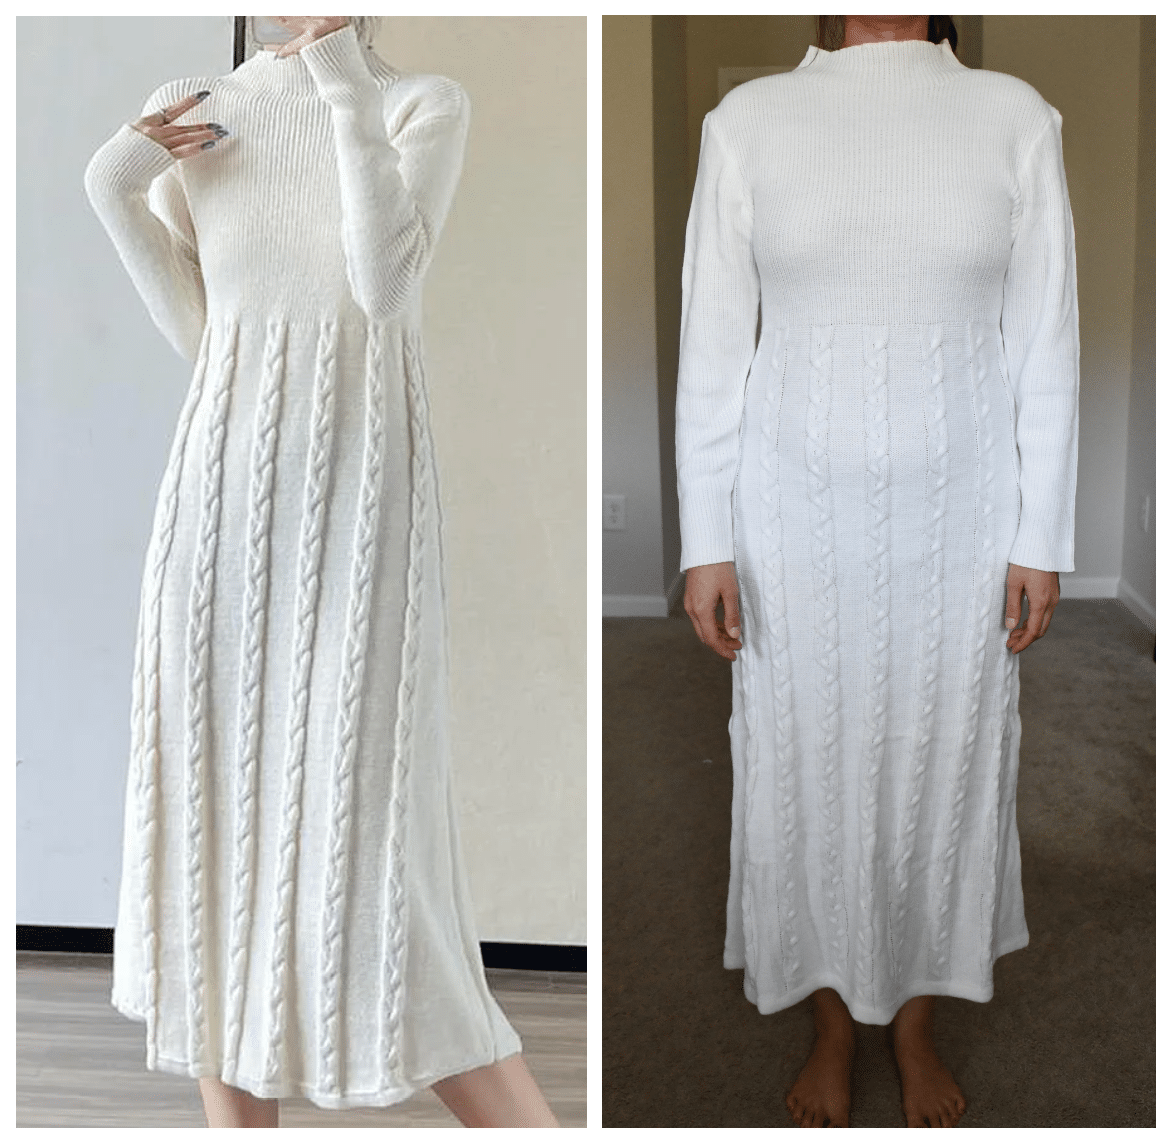 stylewe sweater dress comparison